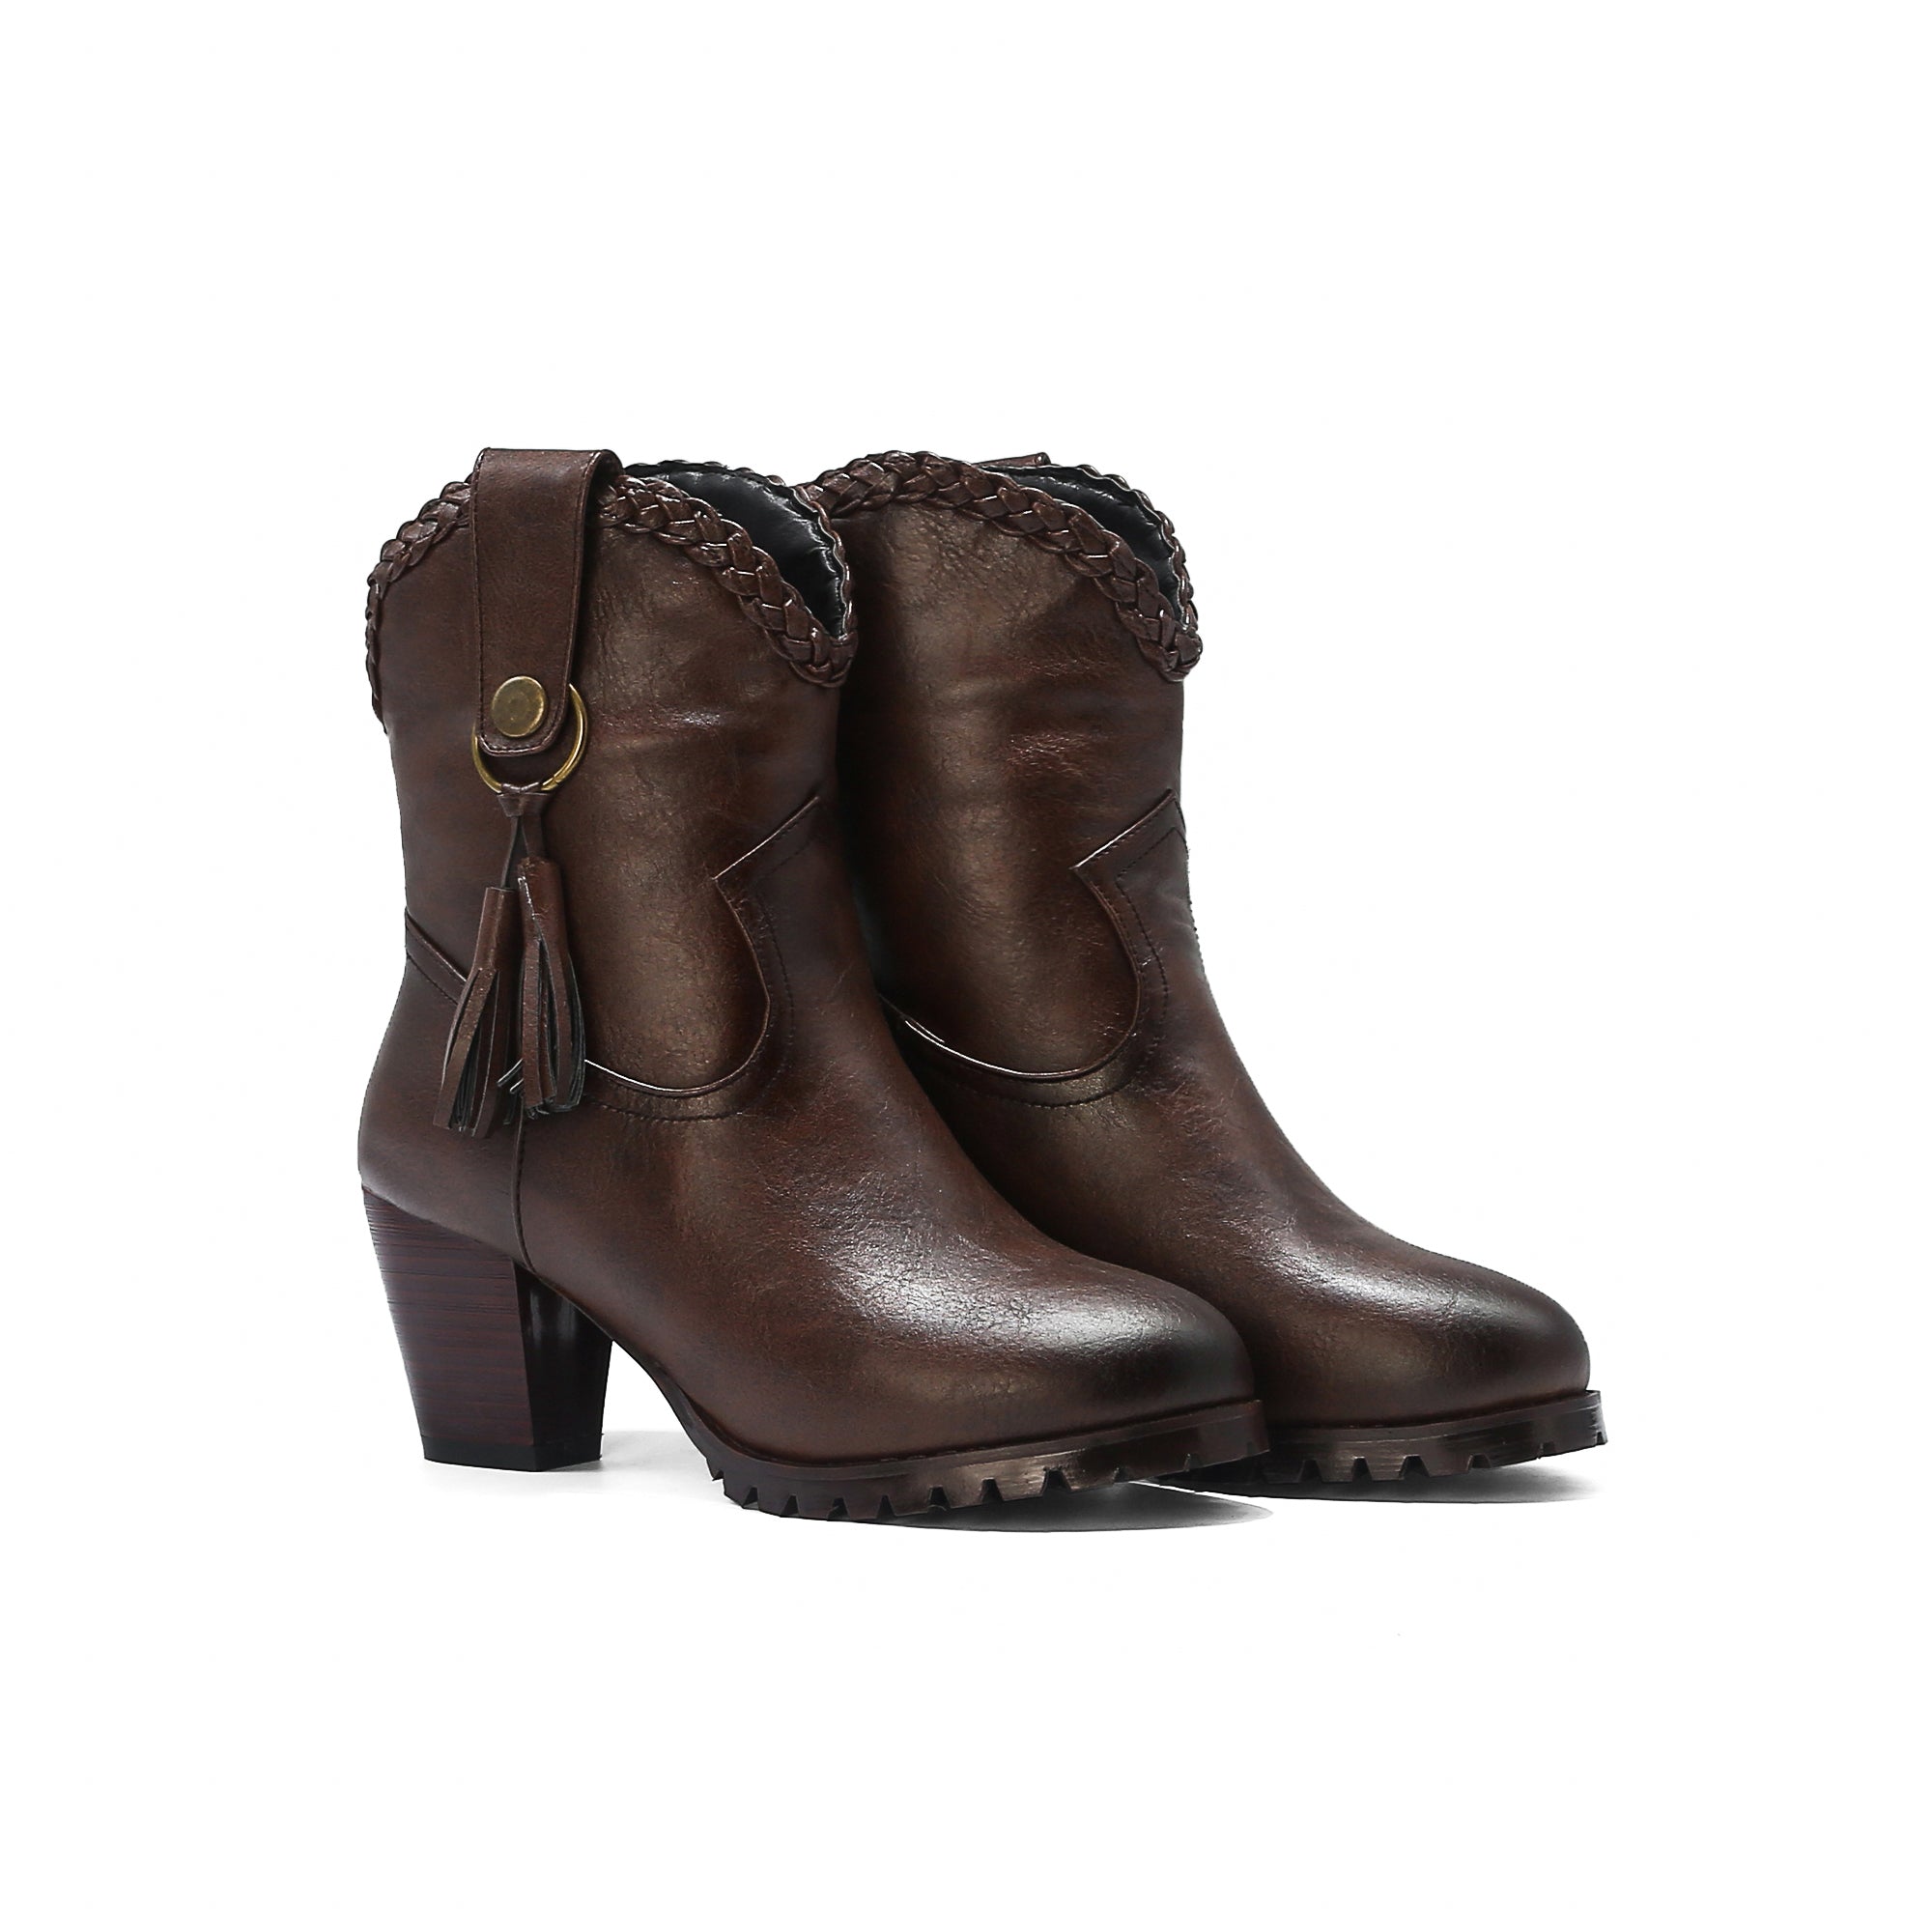 Bigsizeheels Vintage tassel round toe short boots - Dark brown freeshipping - bigsizeheel®-size5-size15 -All Plus Sizes Available!